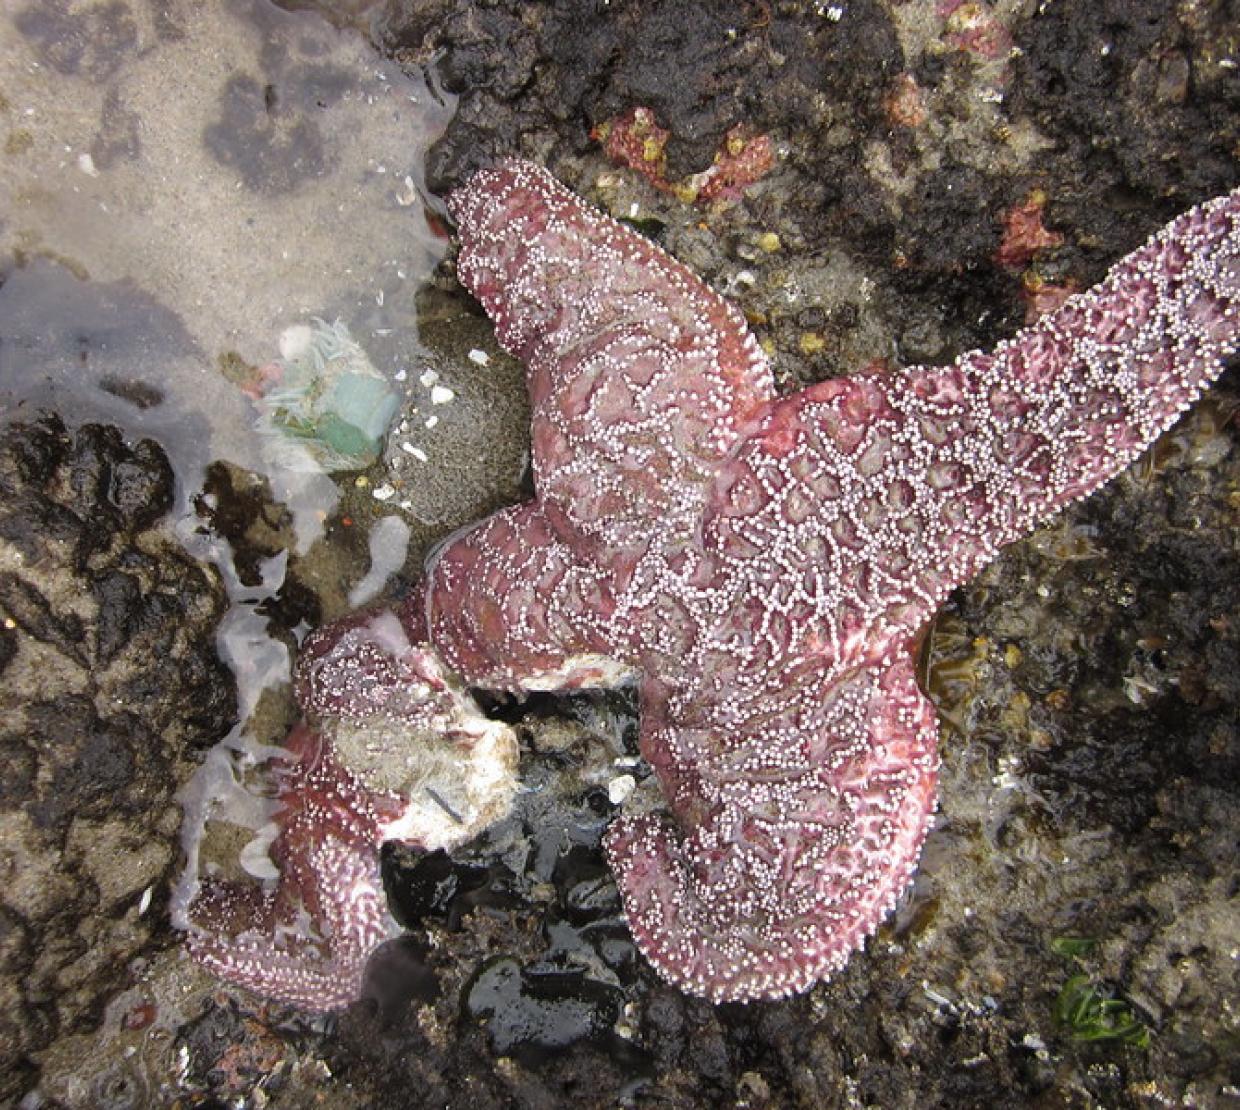 Diseased ochre sea star